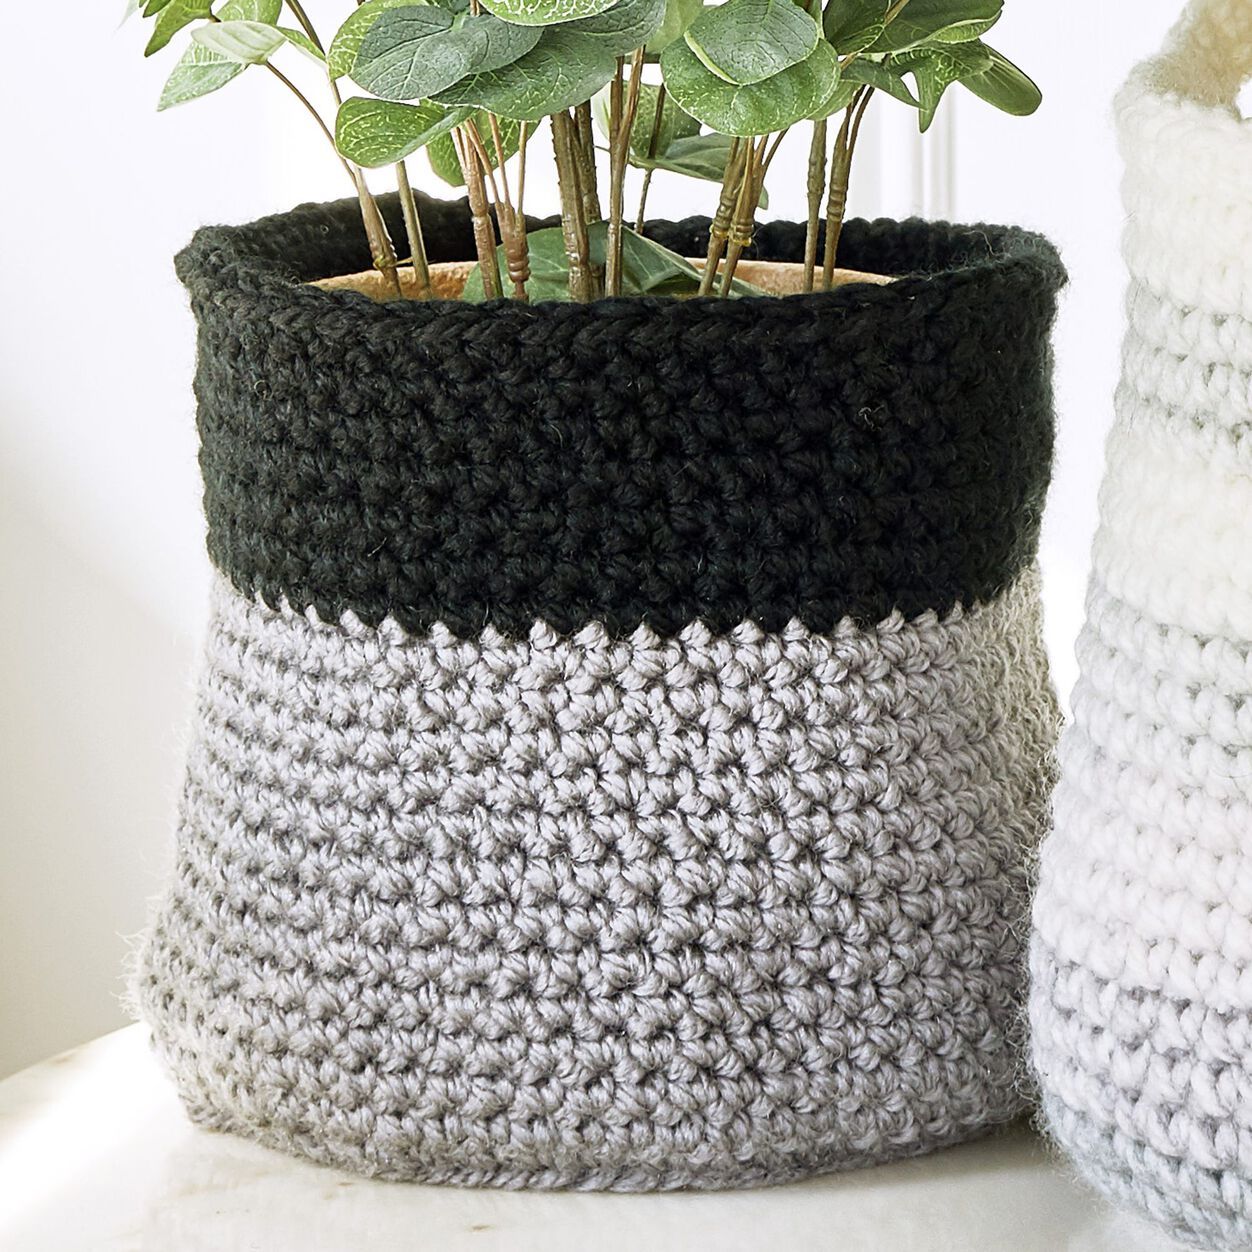 Stitch Club Color Block Crochet Basket Supplies + Tutorial